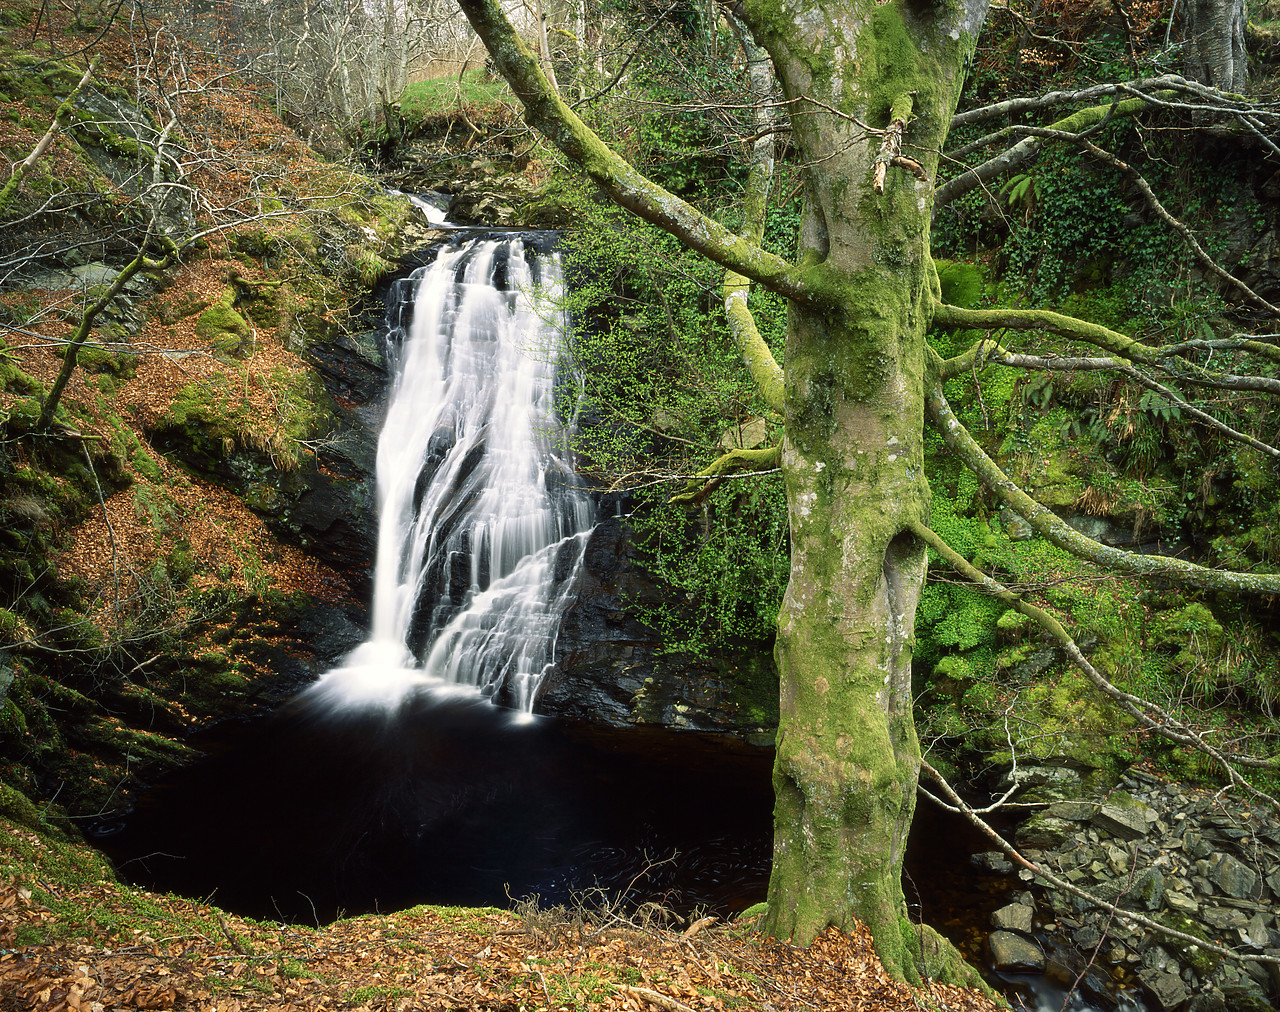 #923967 - Waterfall at Garth Castle, near Keltneyburn, Tayside Region, Scotland